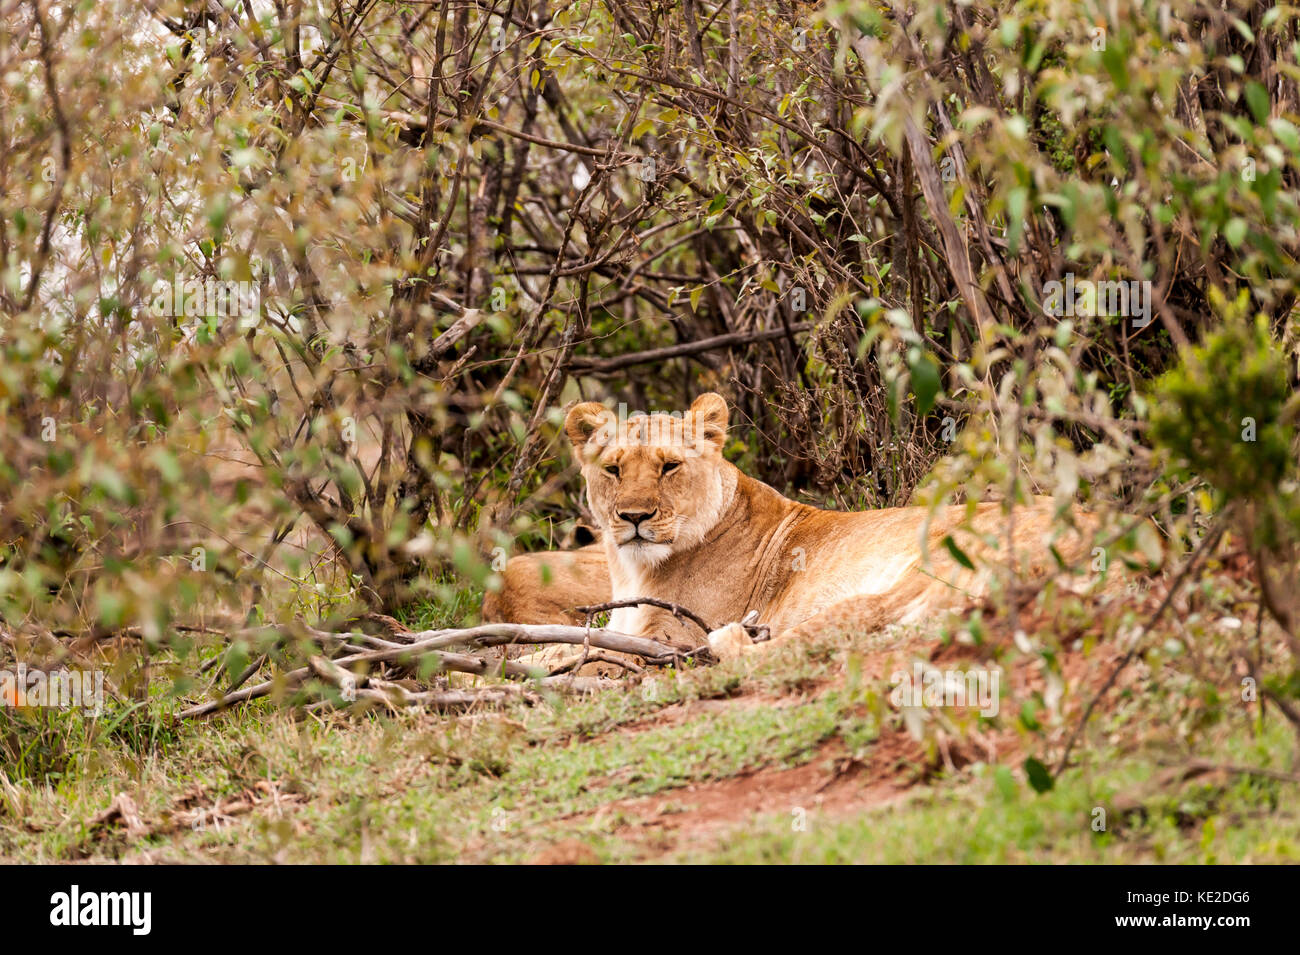 Leones Sabana Africana Masai Mara Fotograf As E Im Genes De Alta Resoluci N Alamy